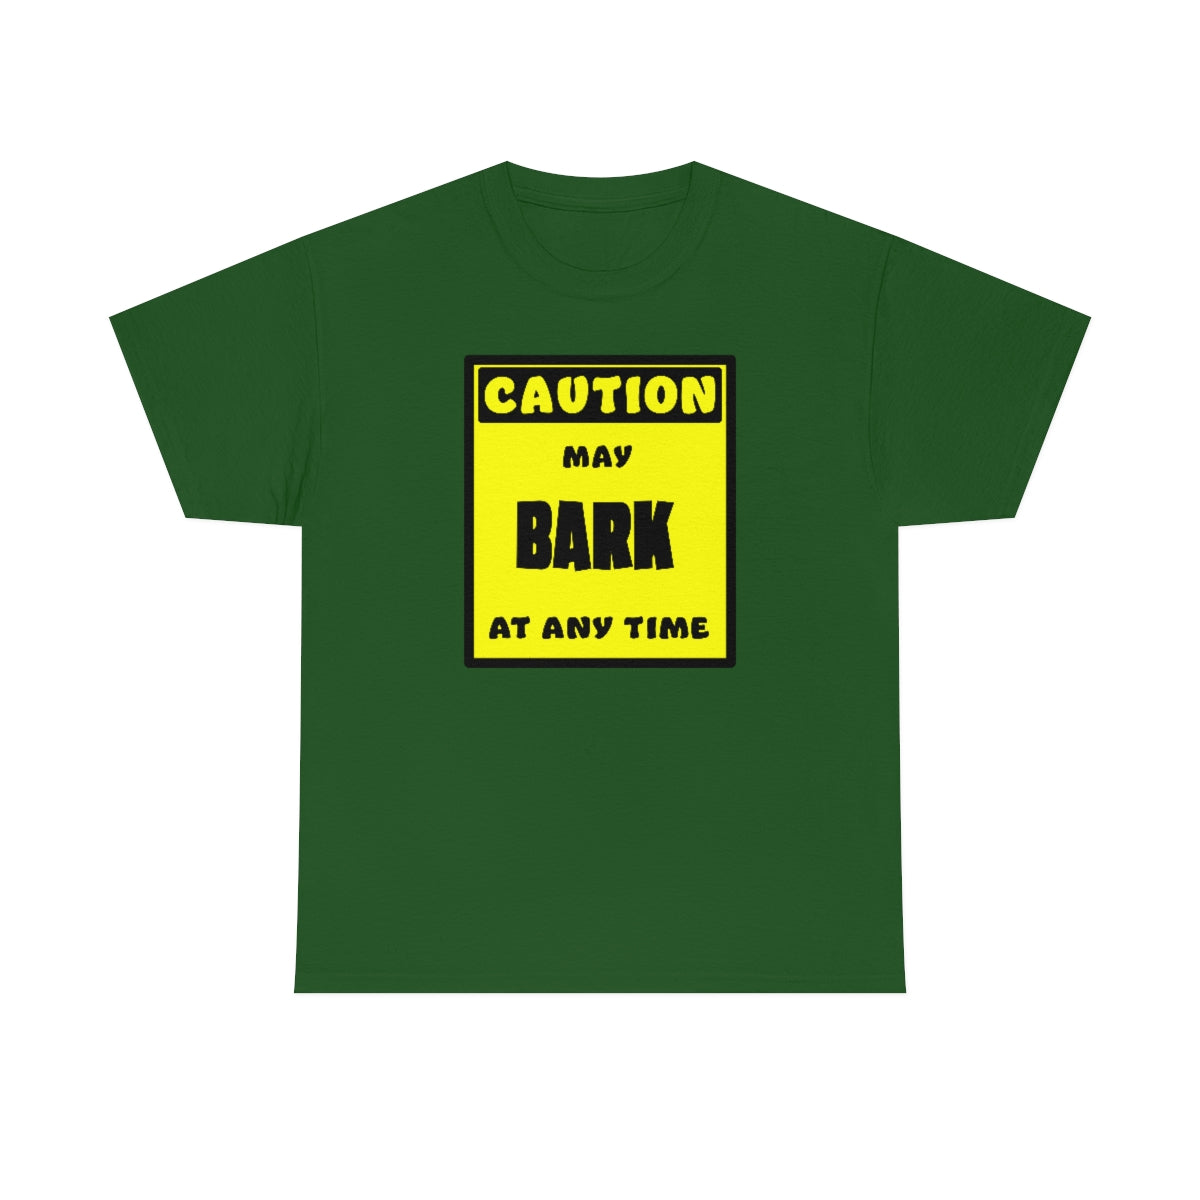 CAUTION! May BARK at any time! - T-Shirt T-Shirt AFLT-Whootorca Green S 